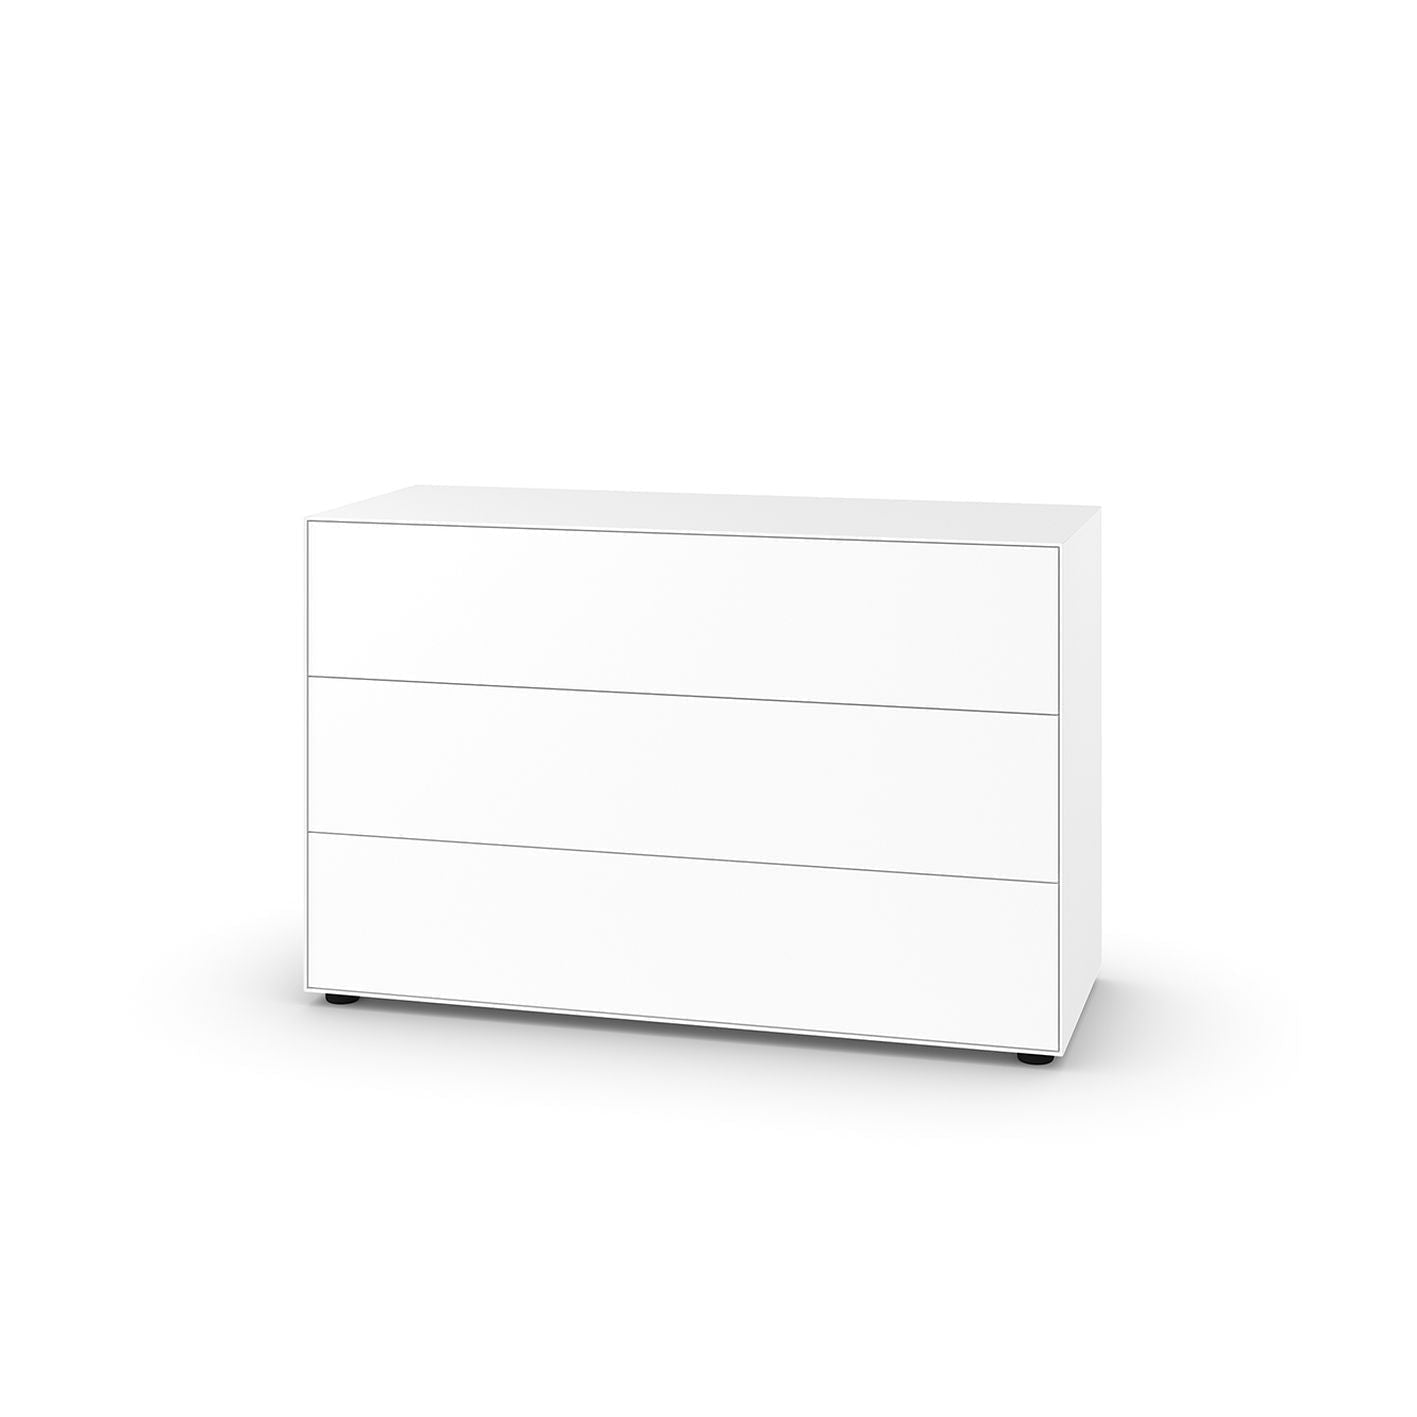 Piure Nex Pur Box Hx W 75x120 cm, 3 cajones, blanco